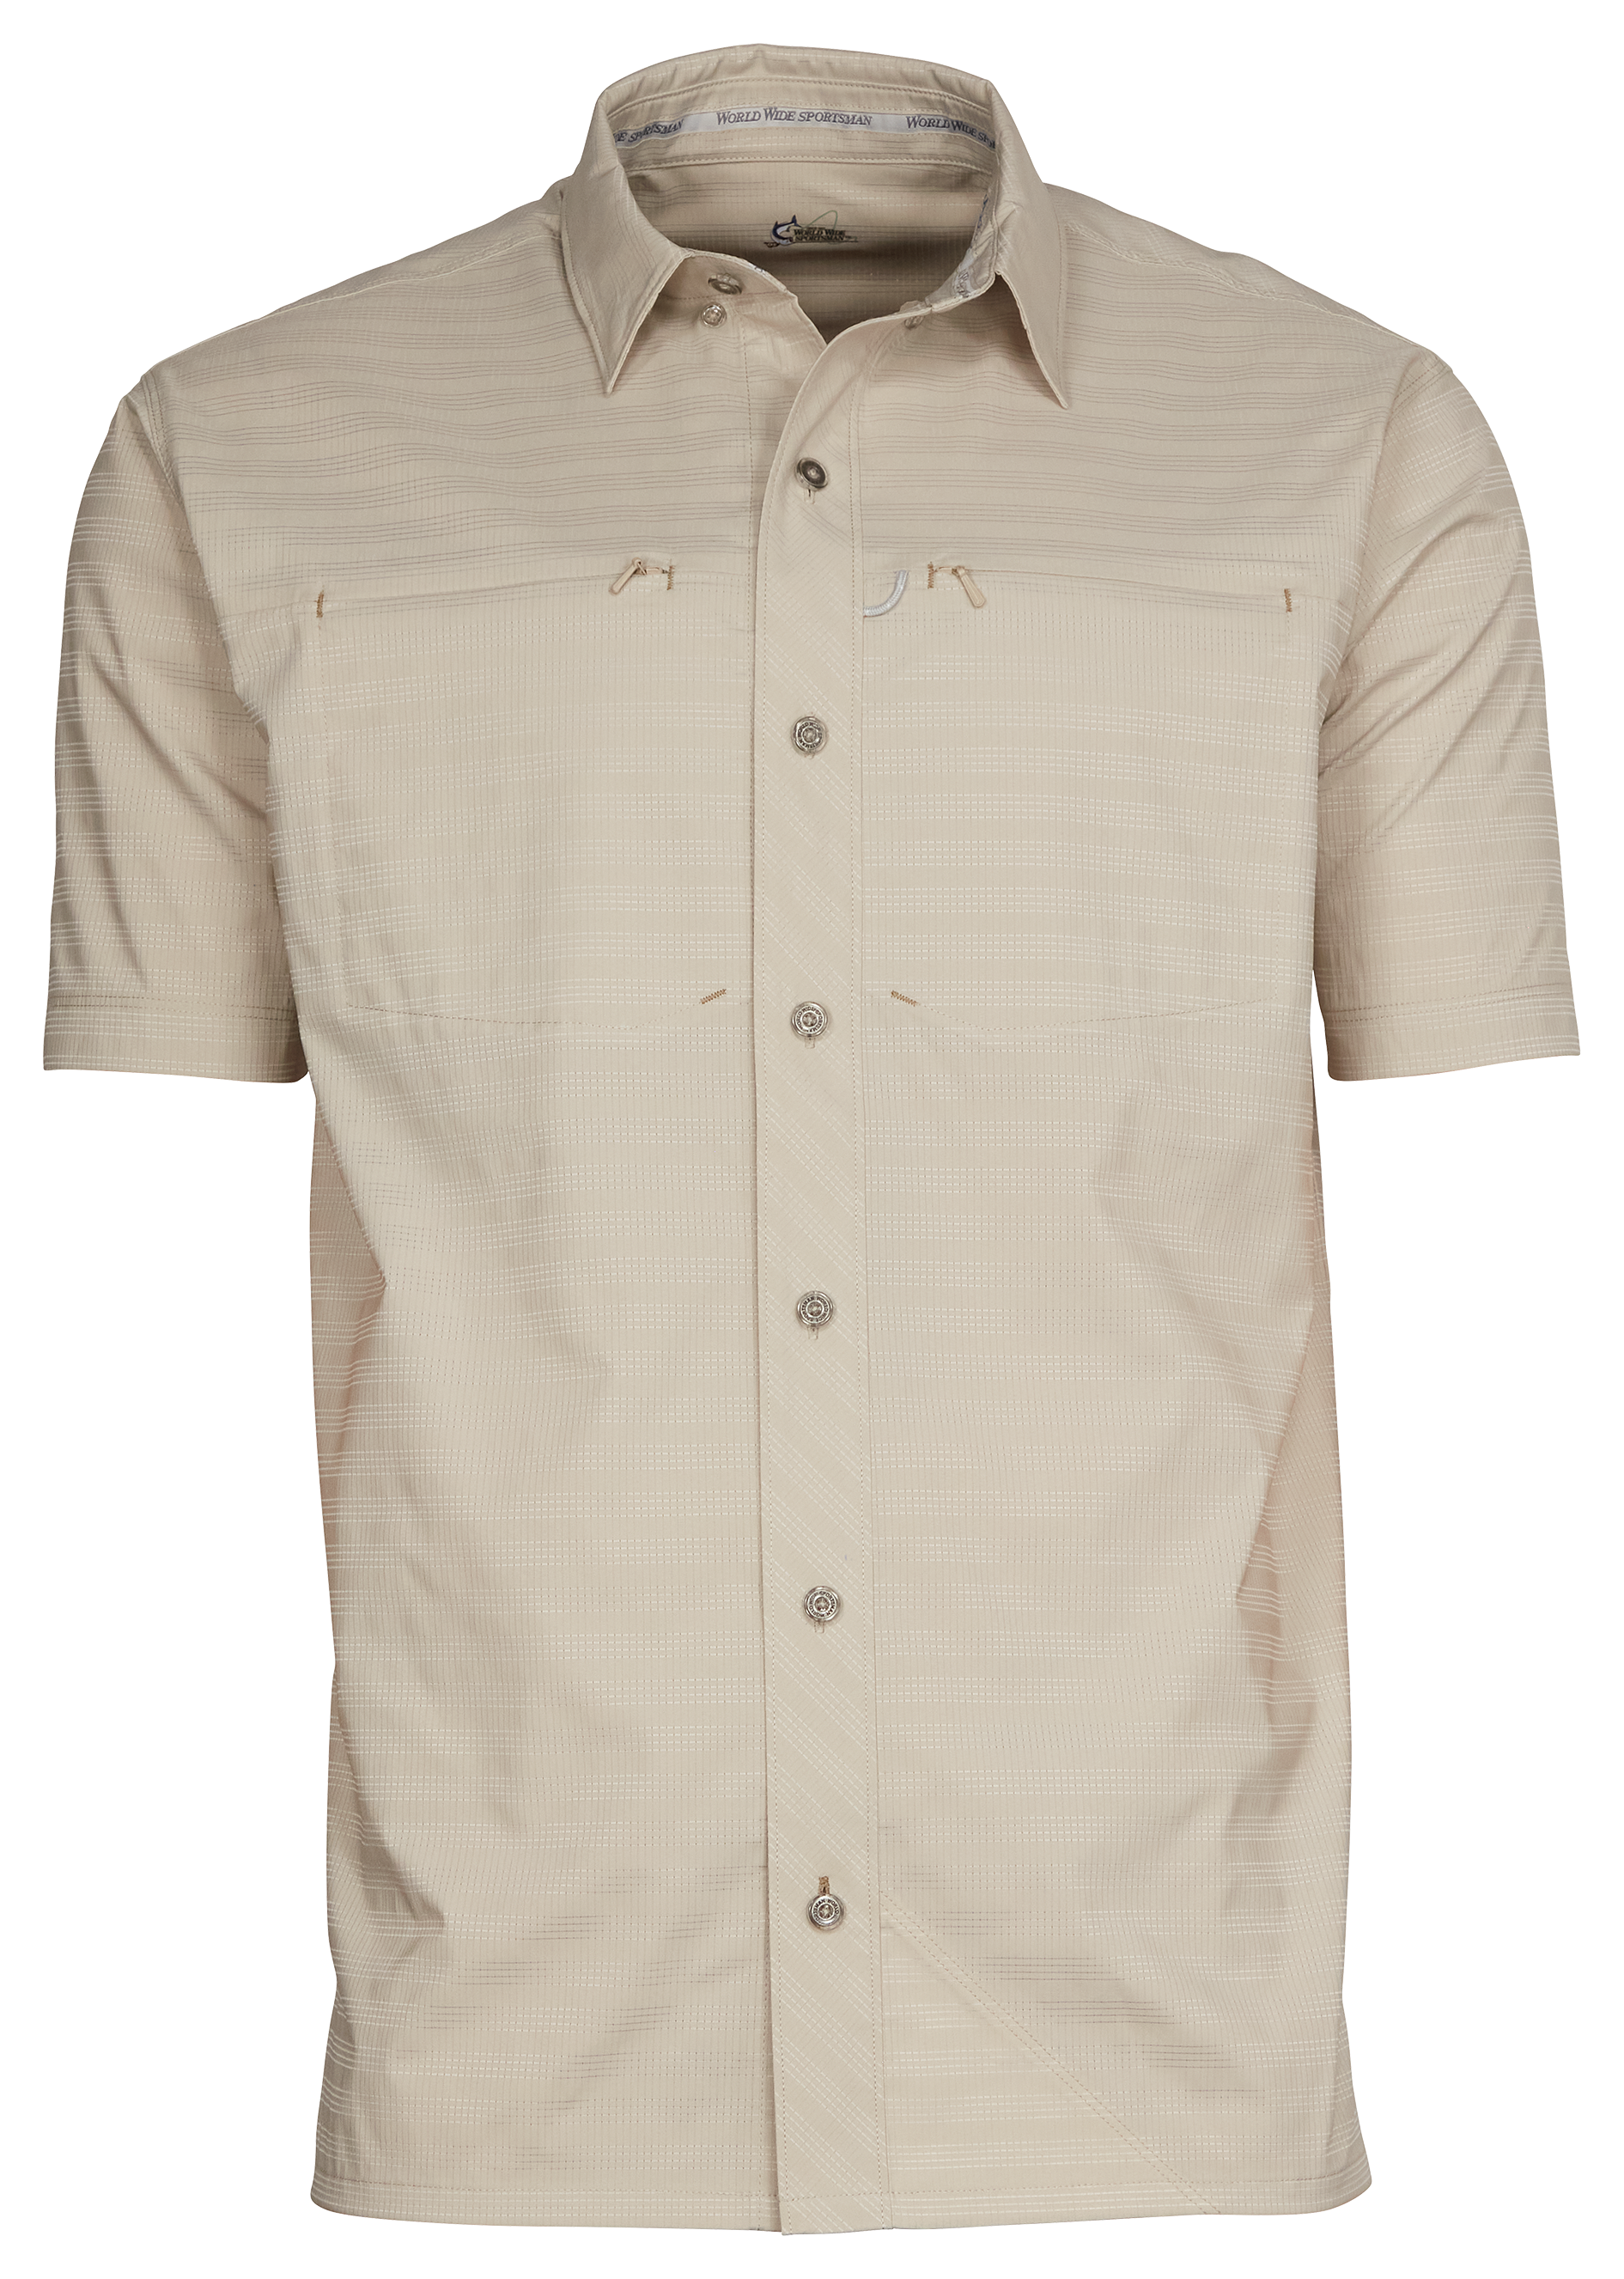 World Wide Sportsman Seacrest 2-Pocket Short-Sleeve Button-Down Shirt for Men - Peyote - S